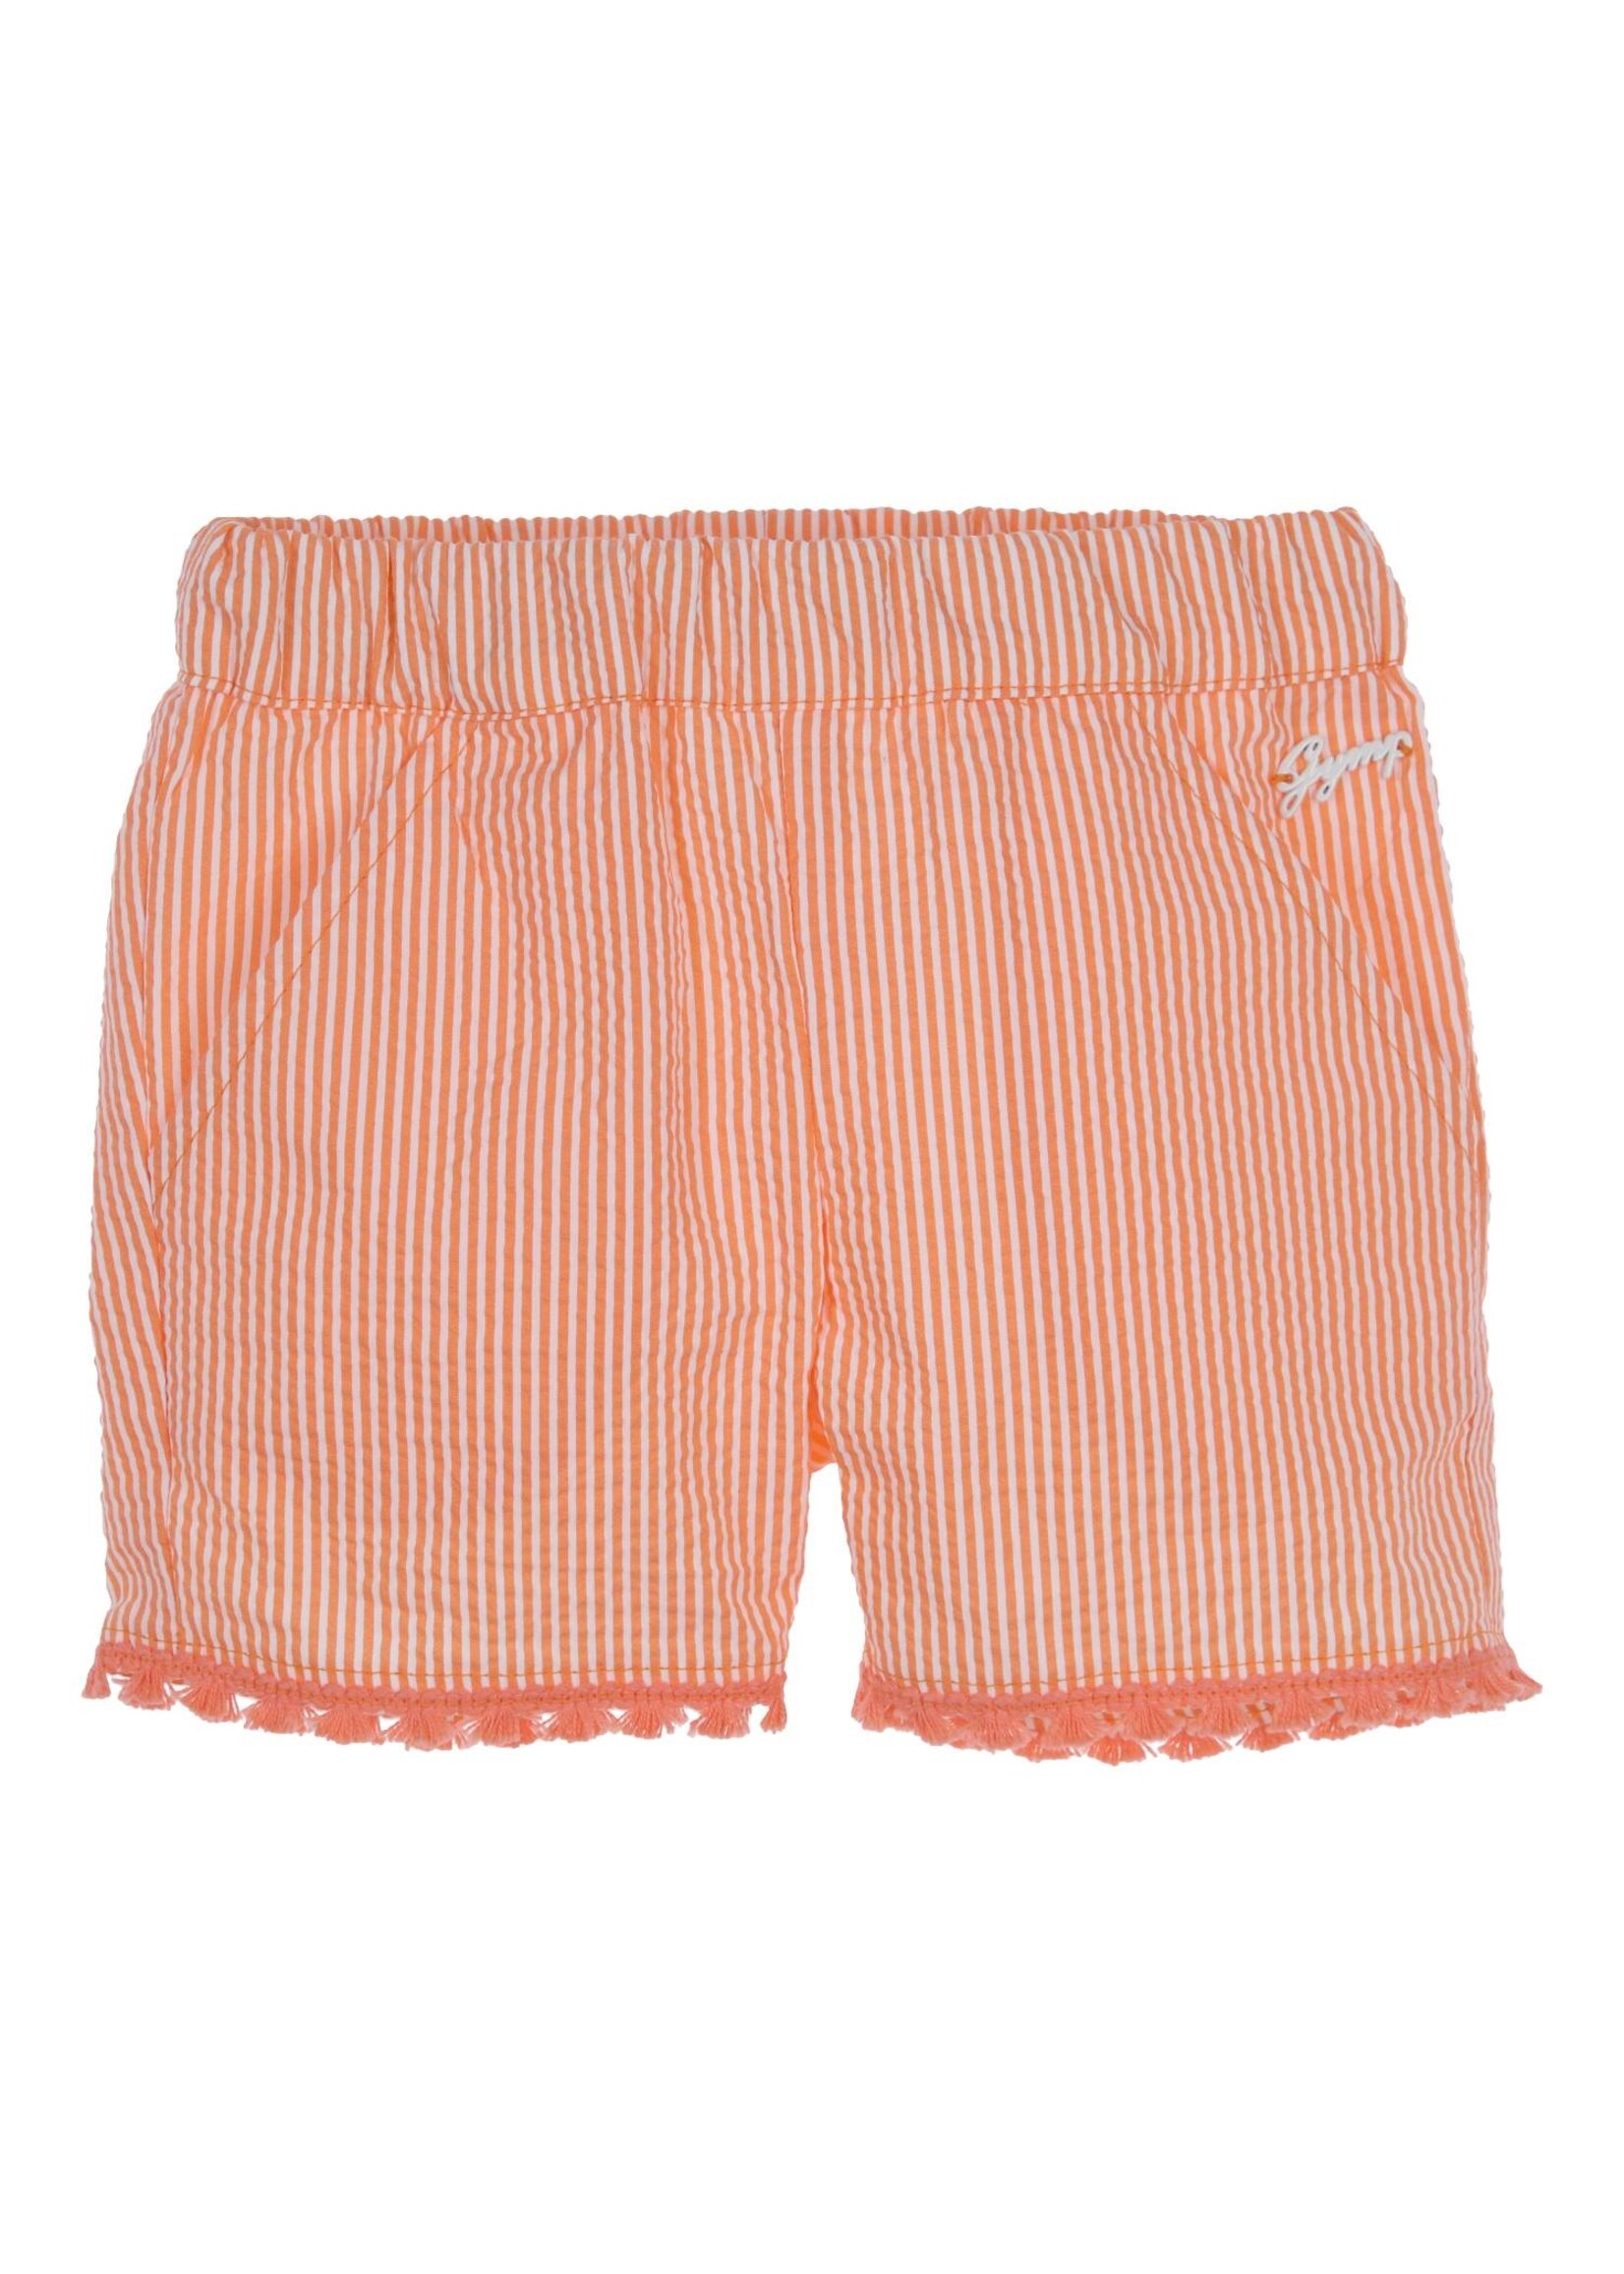 Gymp Girls Shorts Caprio 400-4189-10 Orange